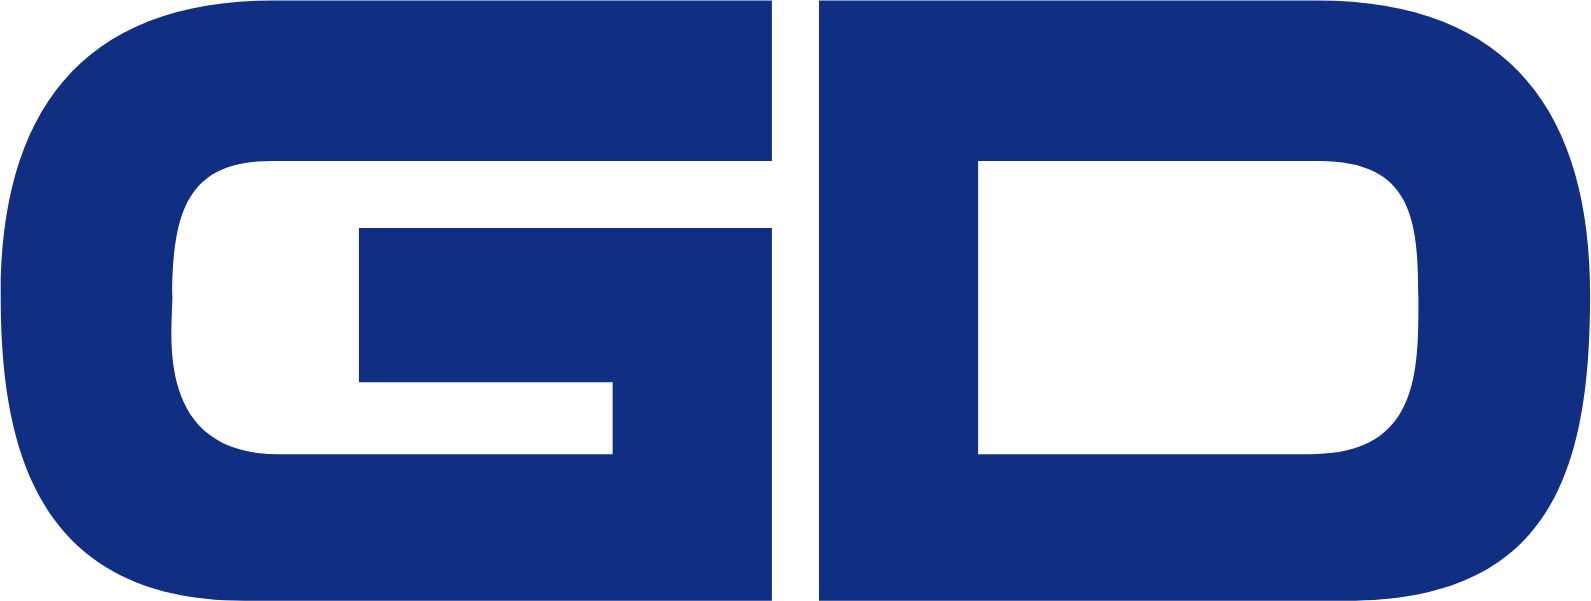 General Dynamics logo (transparent PNG)